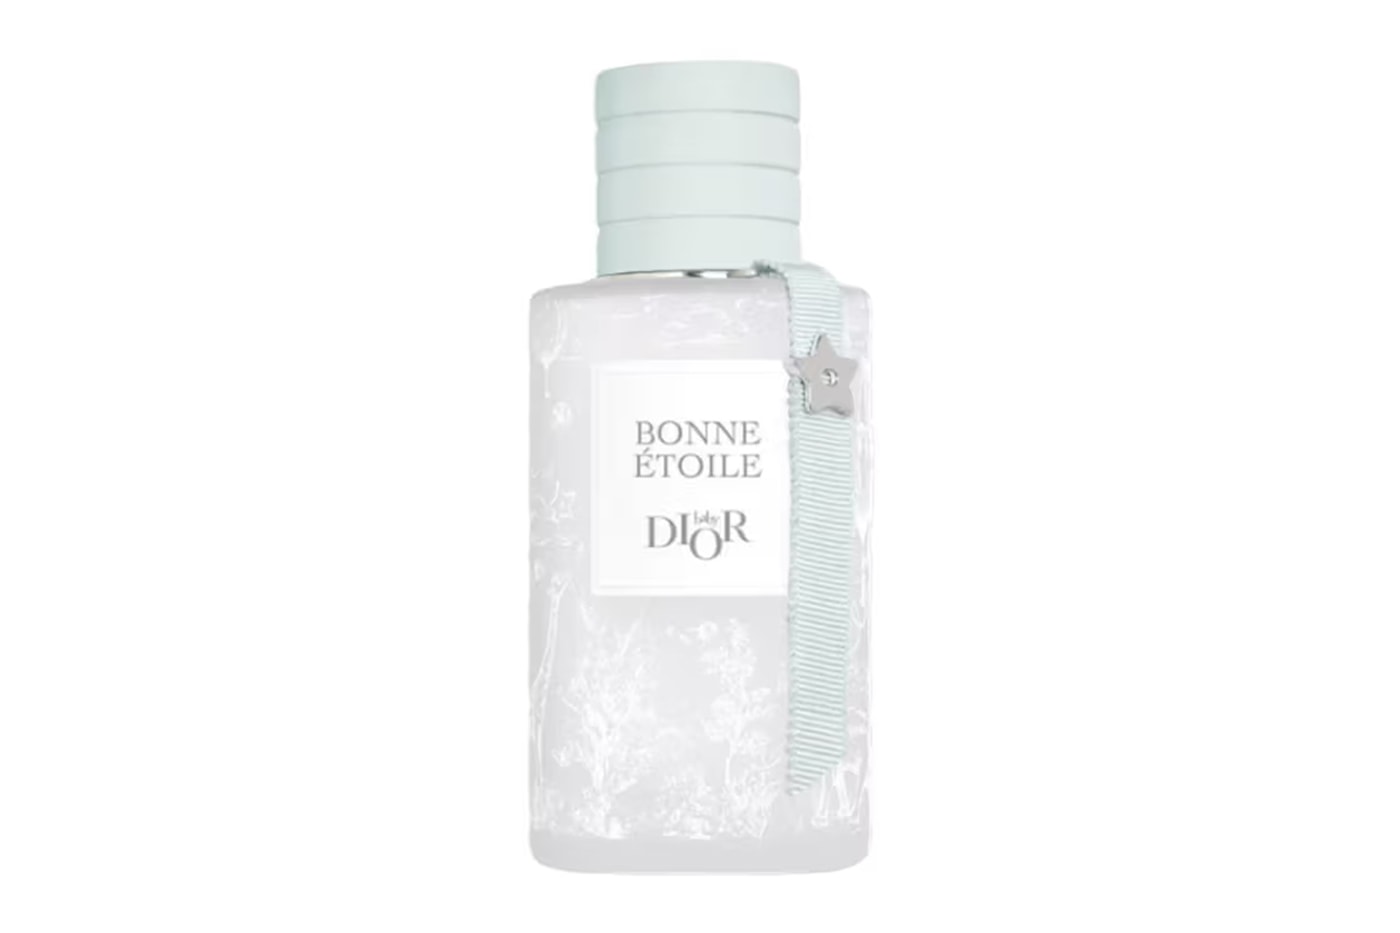 Dior Bonne Étoile Scented Water babies perfume scent skincare line sensitive skin moisturizer hydration milk cleanser foam